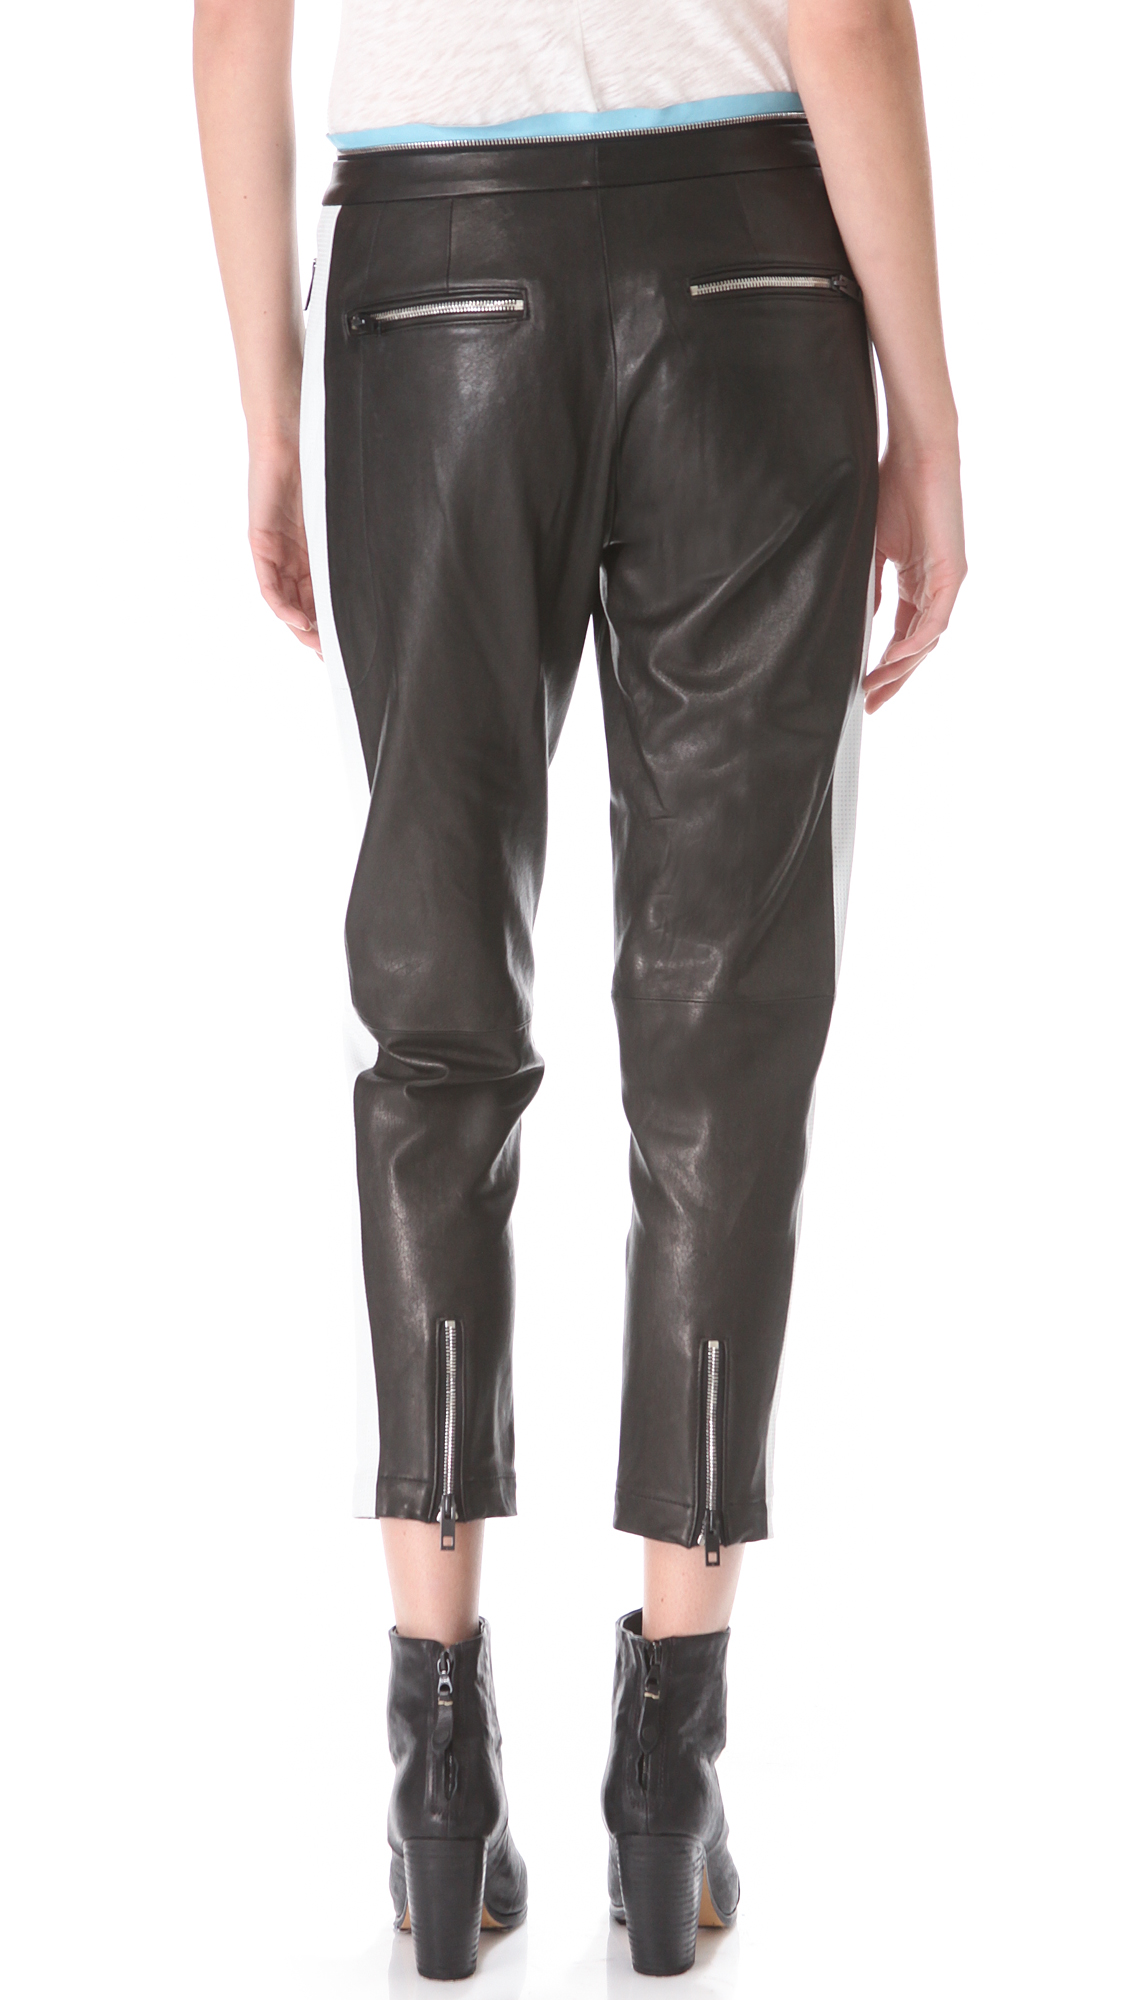 Lyst - Rag & Bone Leather Pants in Black